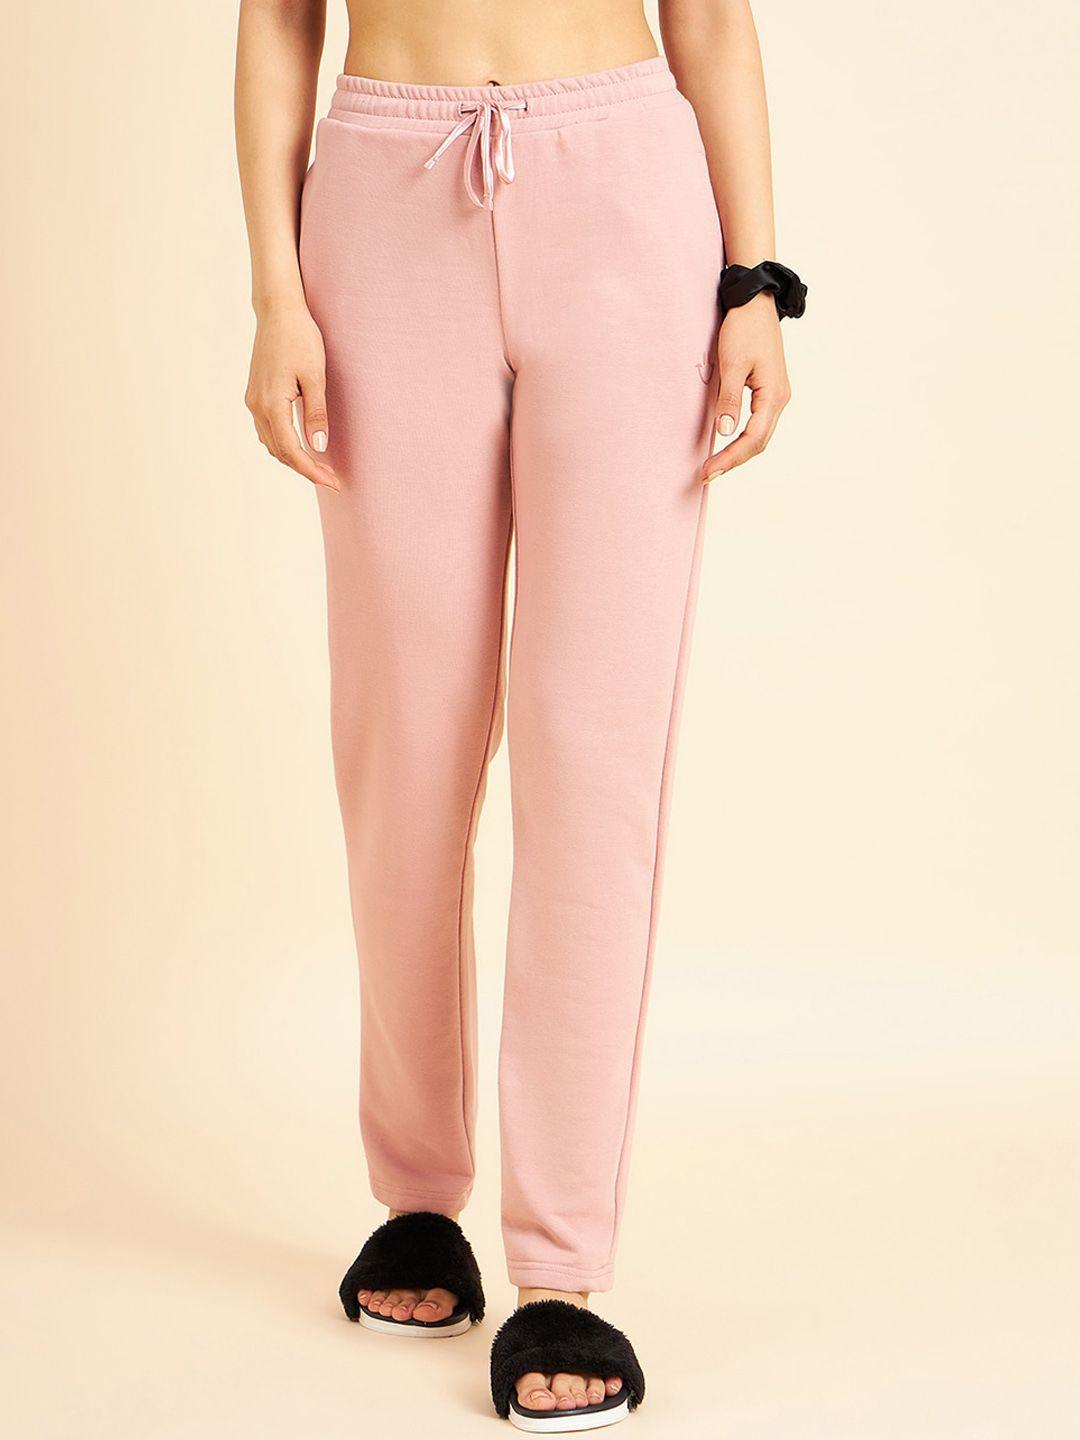 sweet-dreams-women-pink-mid-rise-straight-lounge-pants